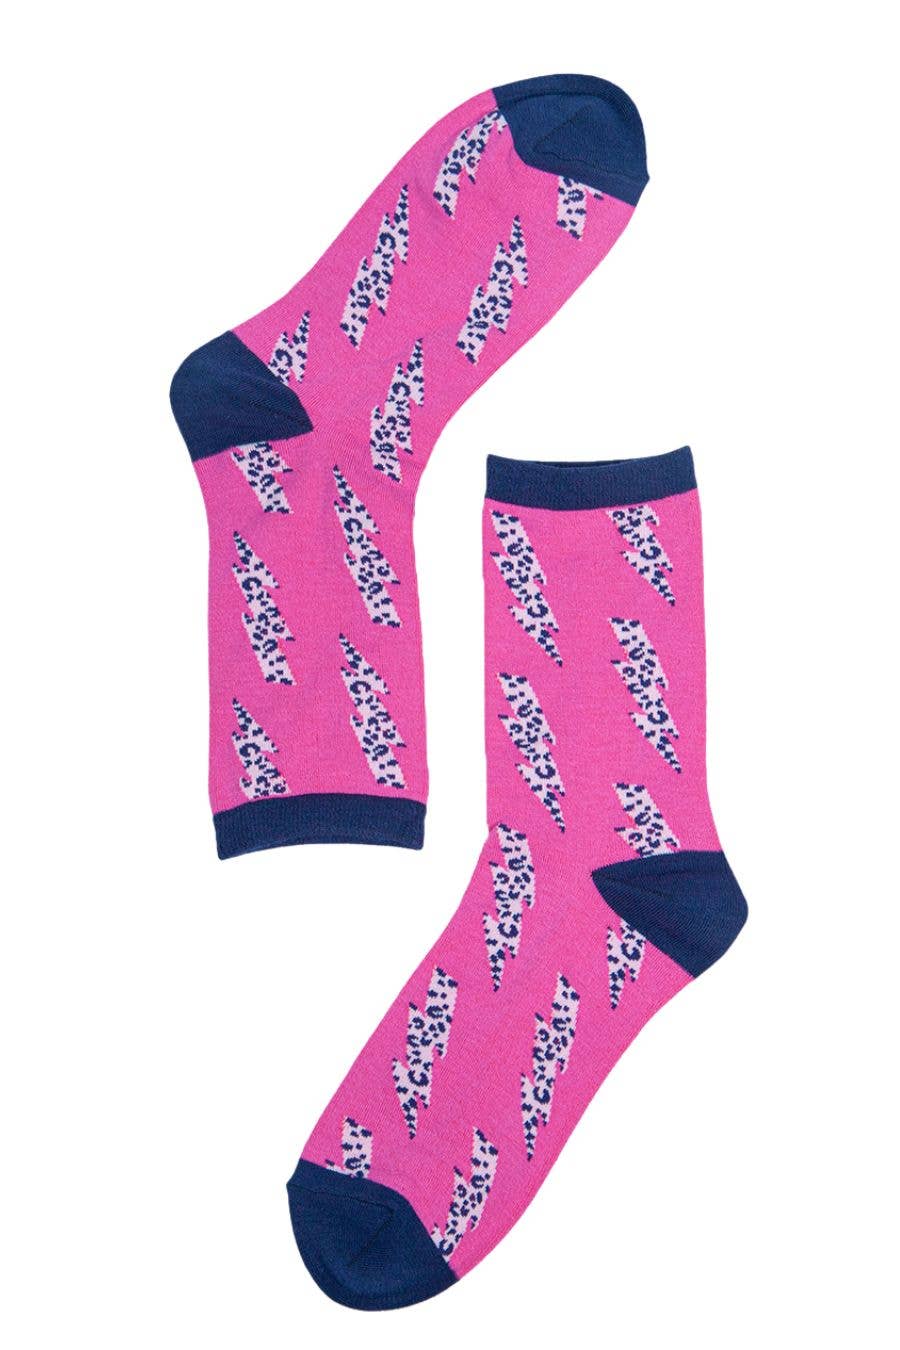 Sock Talk - Womens Bamboo Socks Leopard Print Socks Lightning Bolt Pink